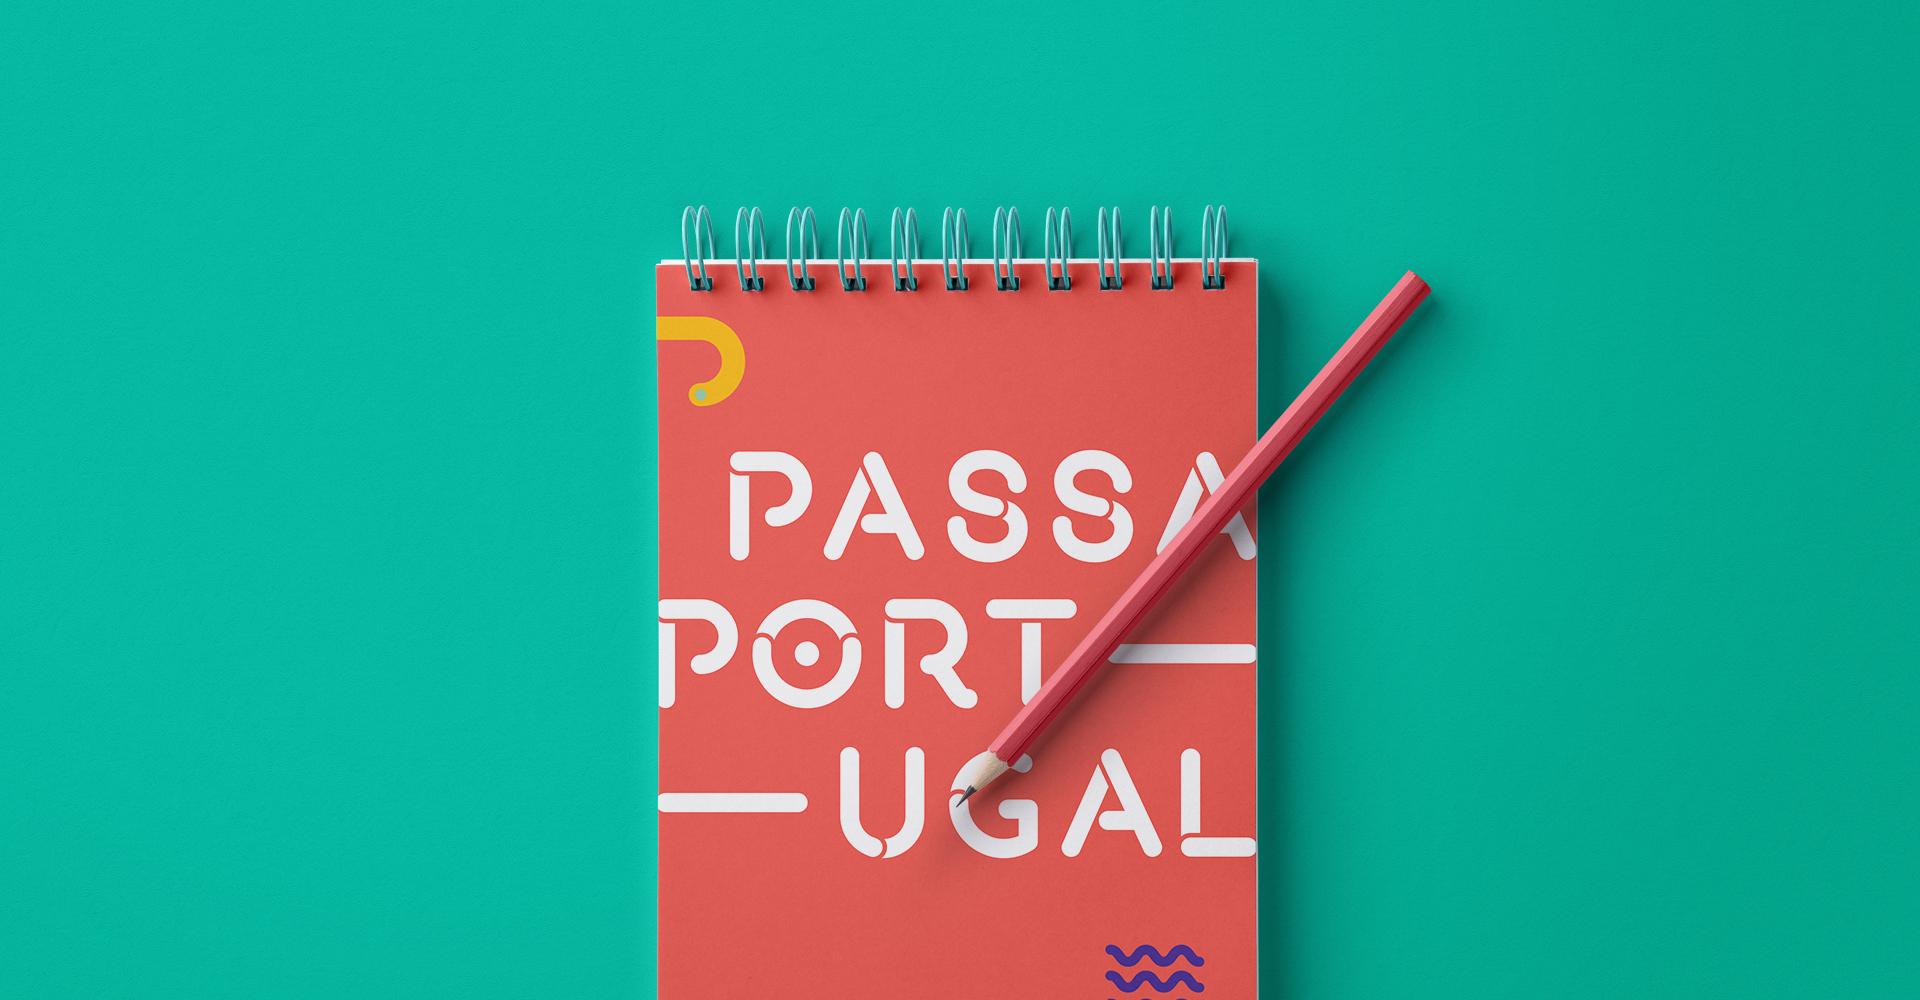 Passaportugal - Detalhe 8 - LOBA.cx